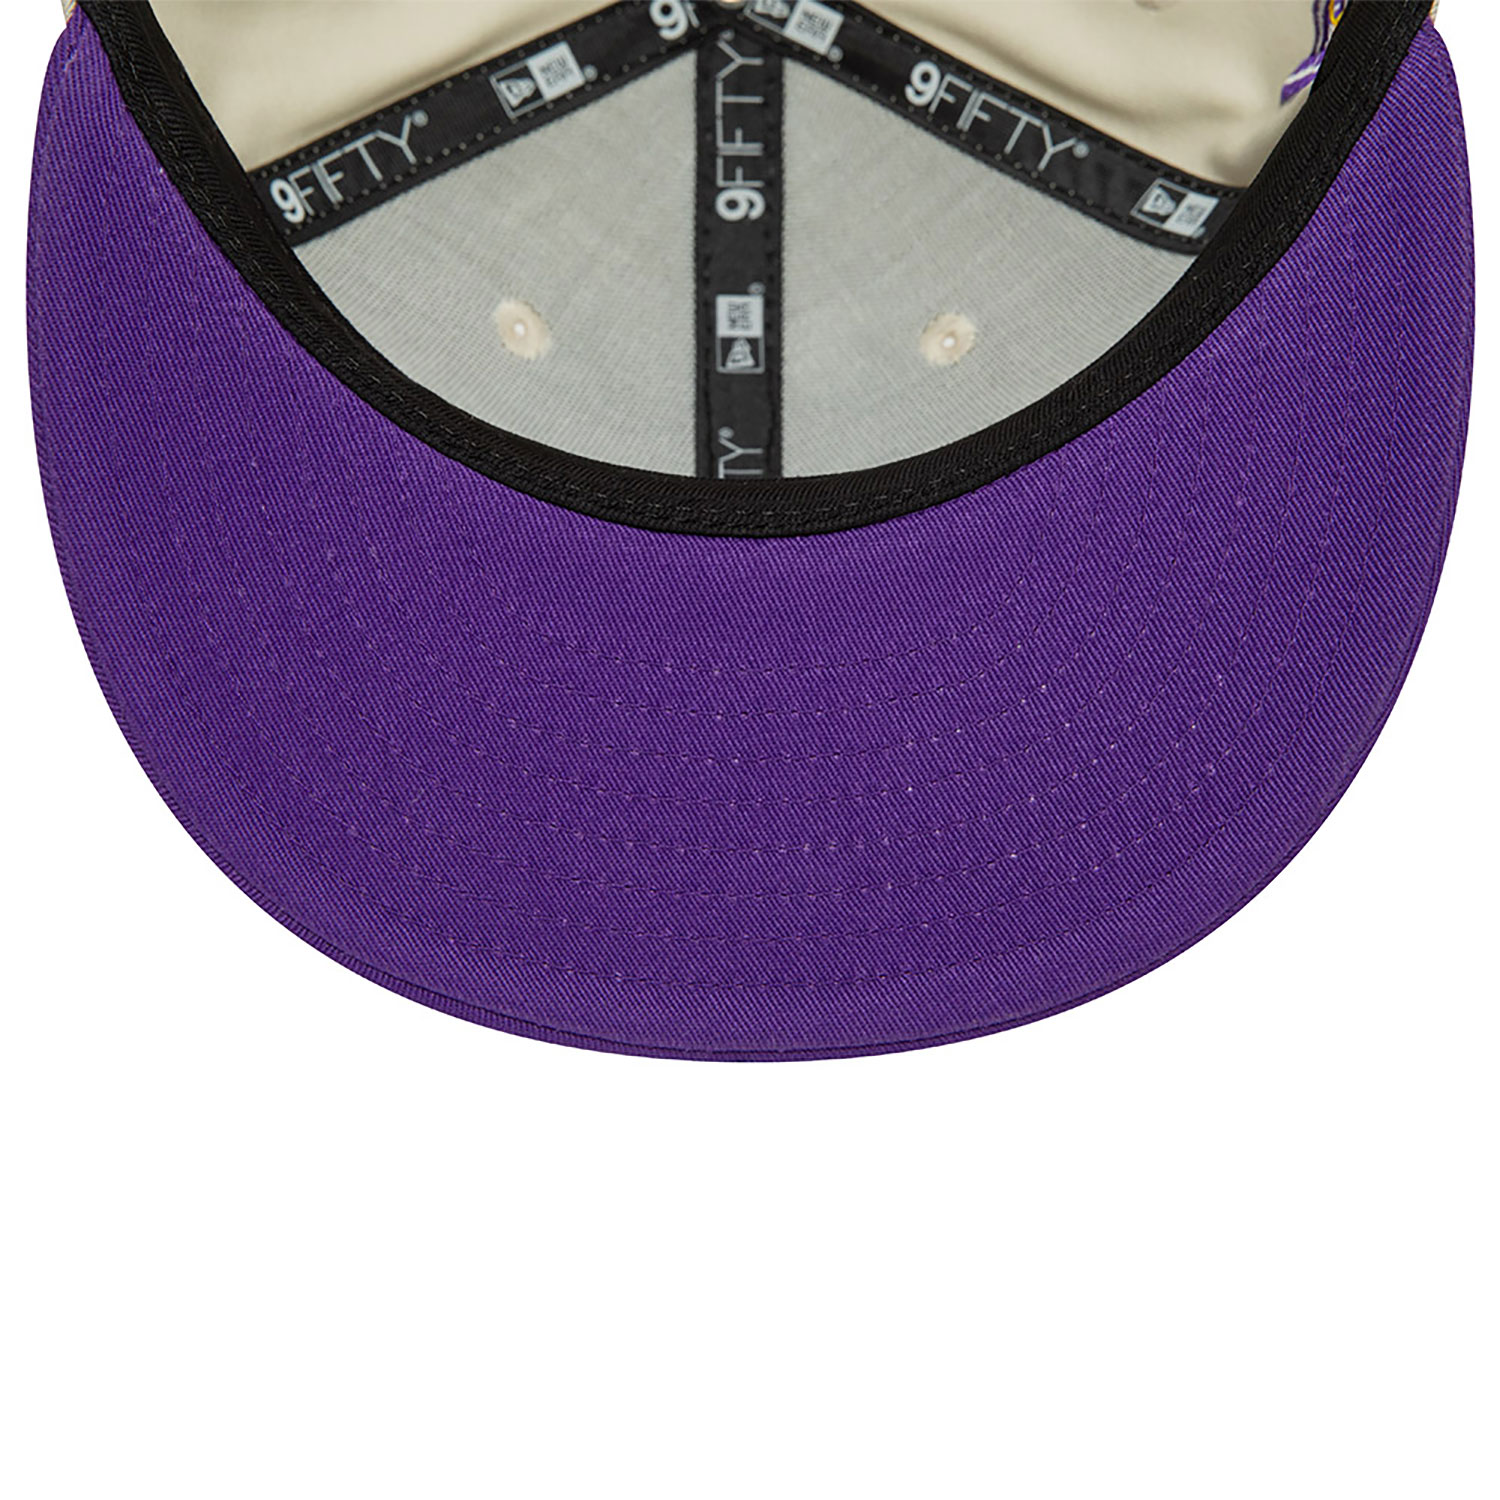 LA Lakers NBA Logo Stone 9FIFTY Snapback Cap